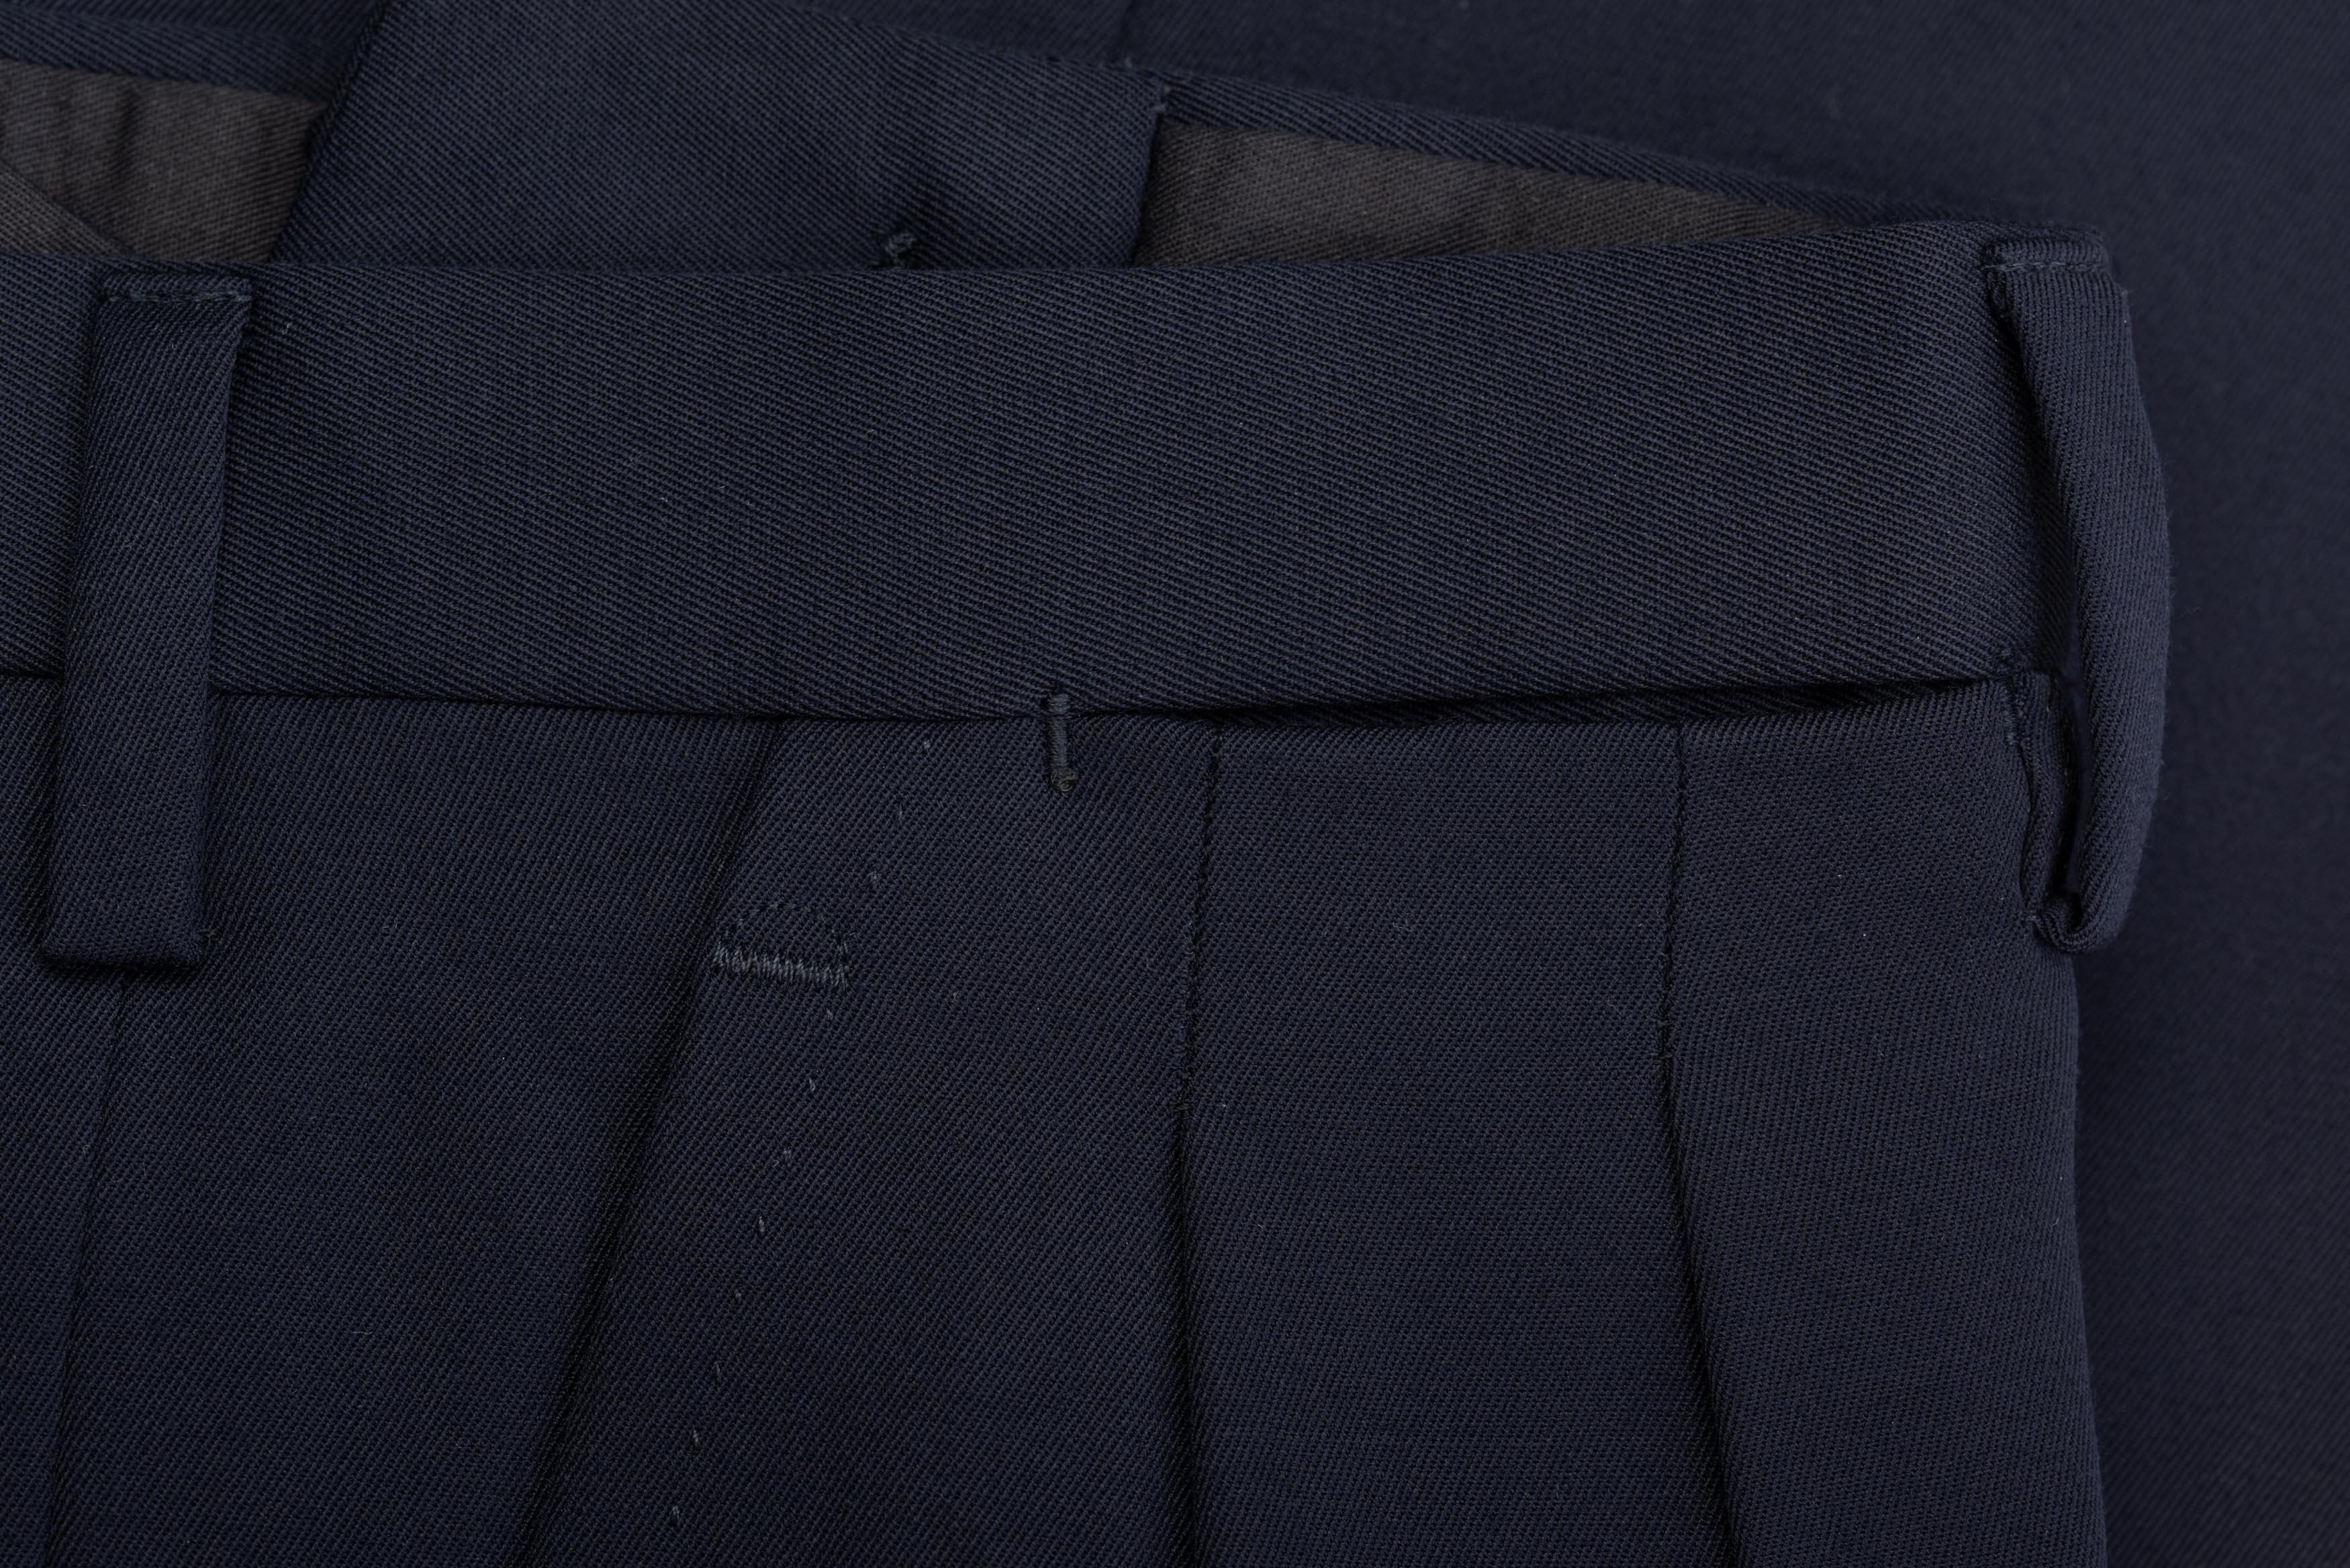 D'AVENZA Roma Handmade Navy Blue Wool DP Dress Pants EU 48 NEW US 32 D'AVENZA